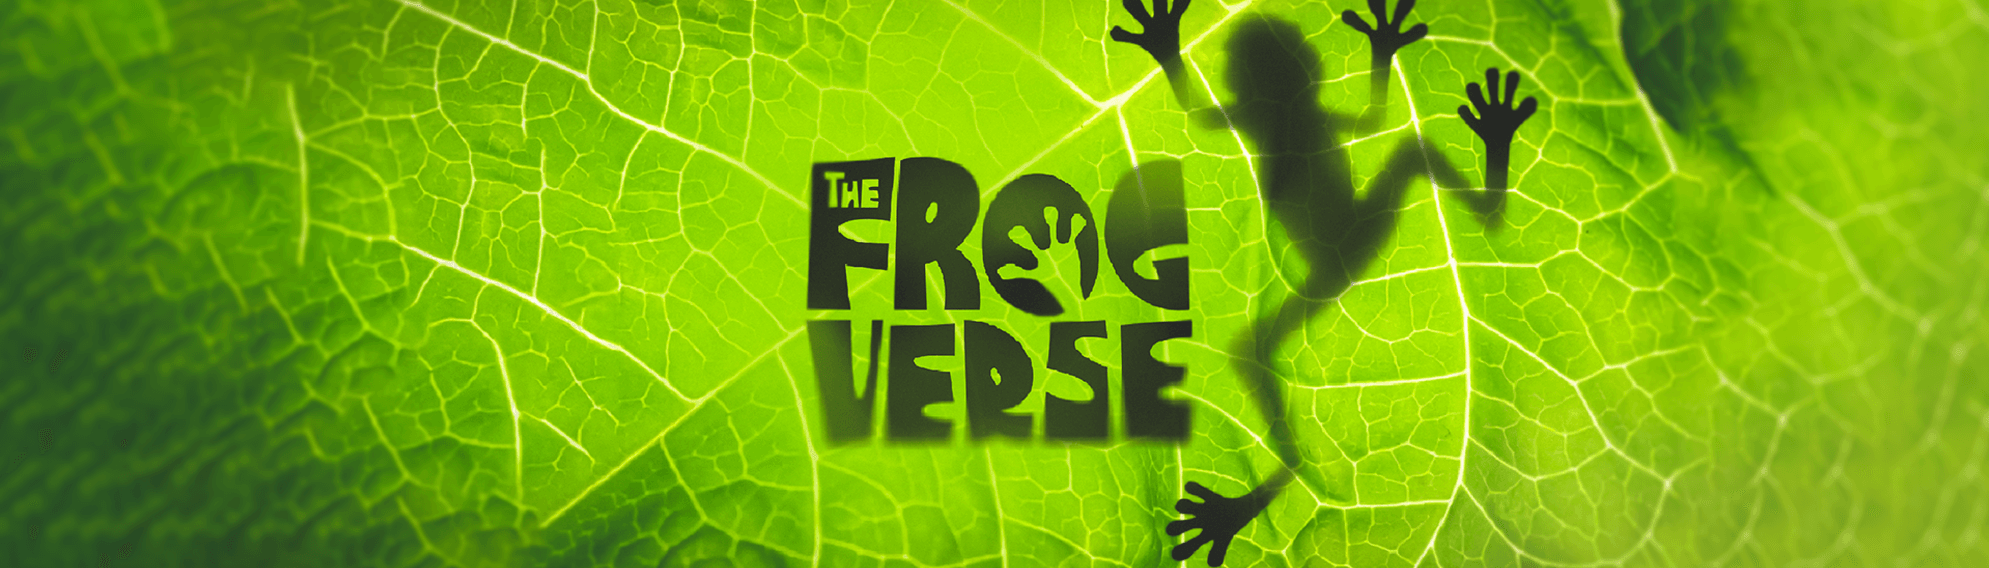 frogverse banner